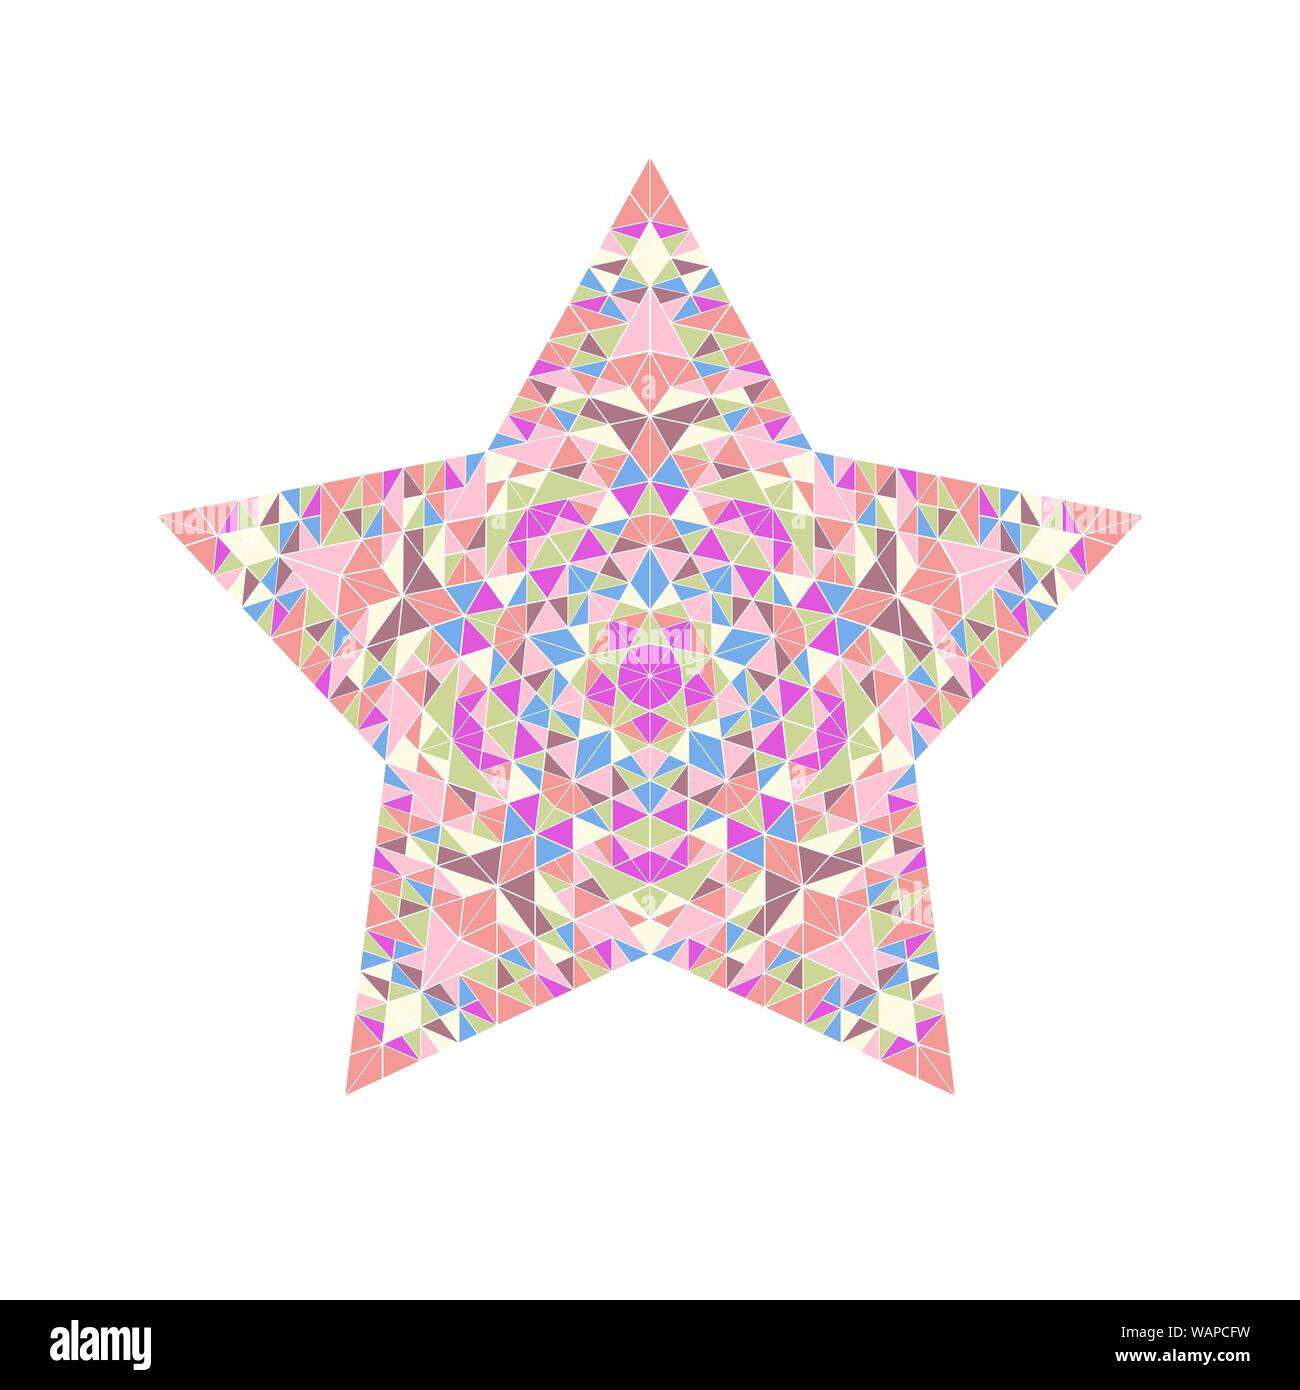 Isolierte Dreieck Stern - polygonale Geometrische geometrische Bunte ornamentale vektor design Element mit Mosaik Dreiecke Stock Vektor